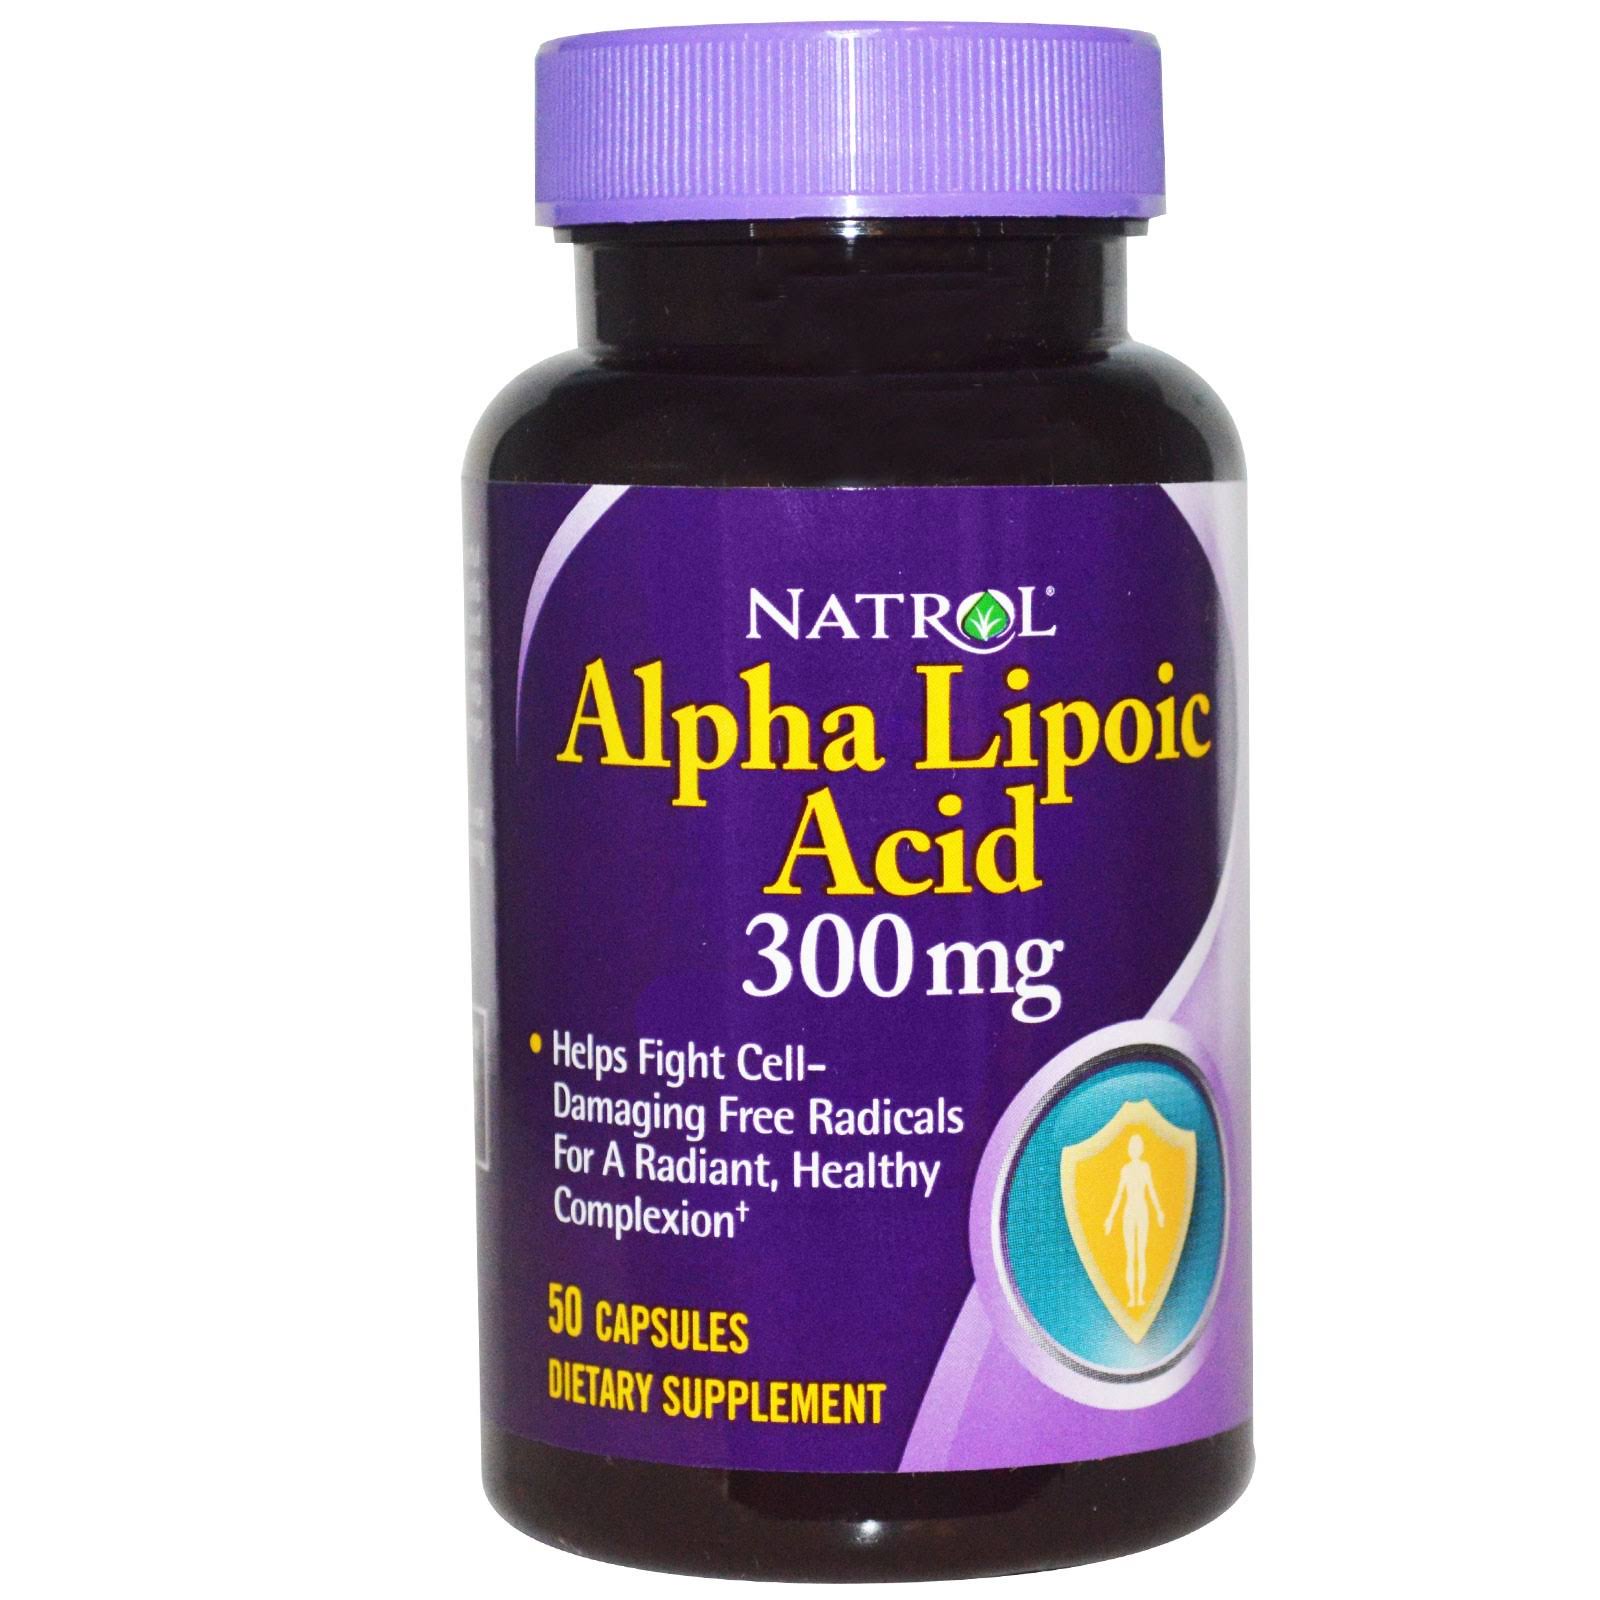 Natrol Alpha Lipoic Acid Dietary Supplement - 300mg, 50 Capsules